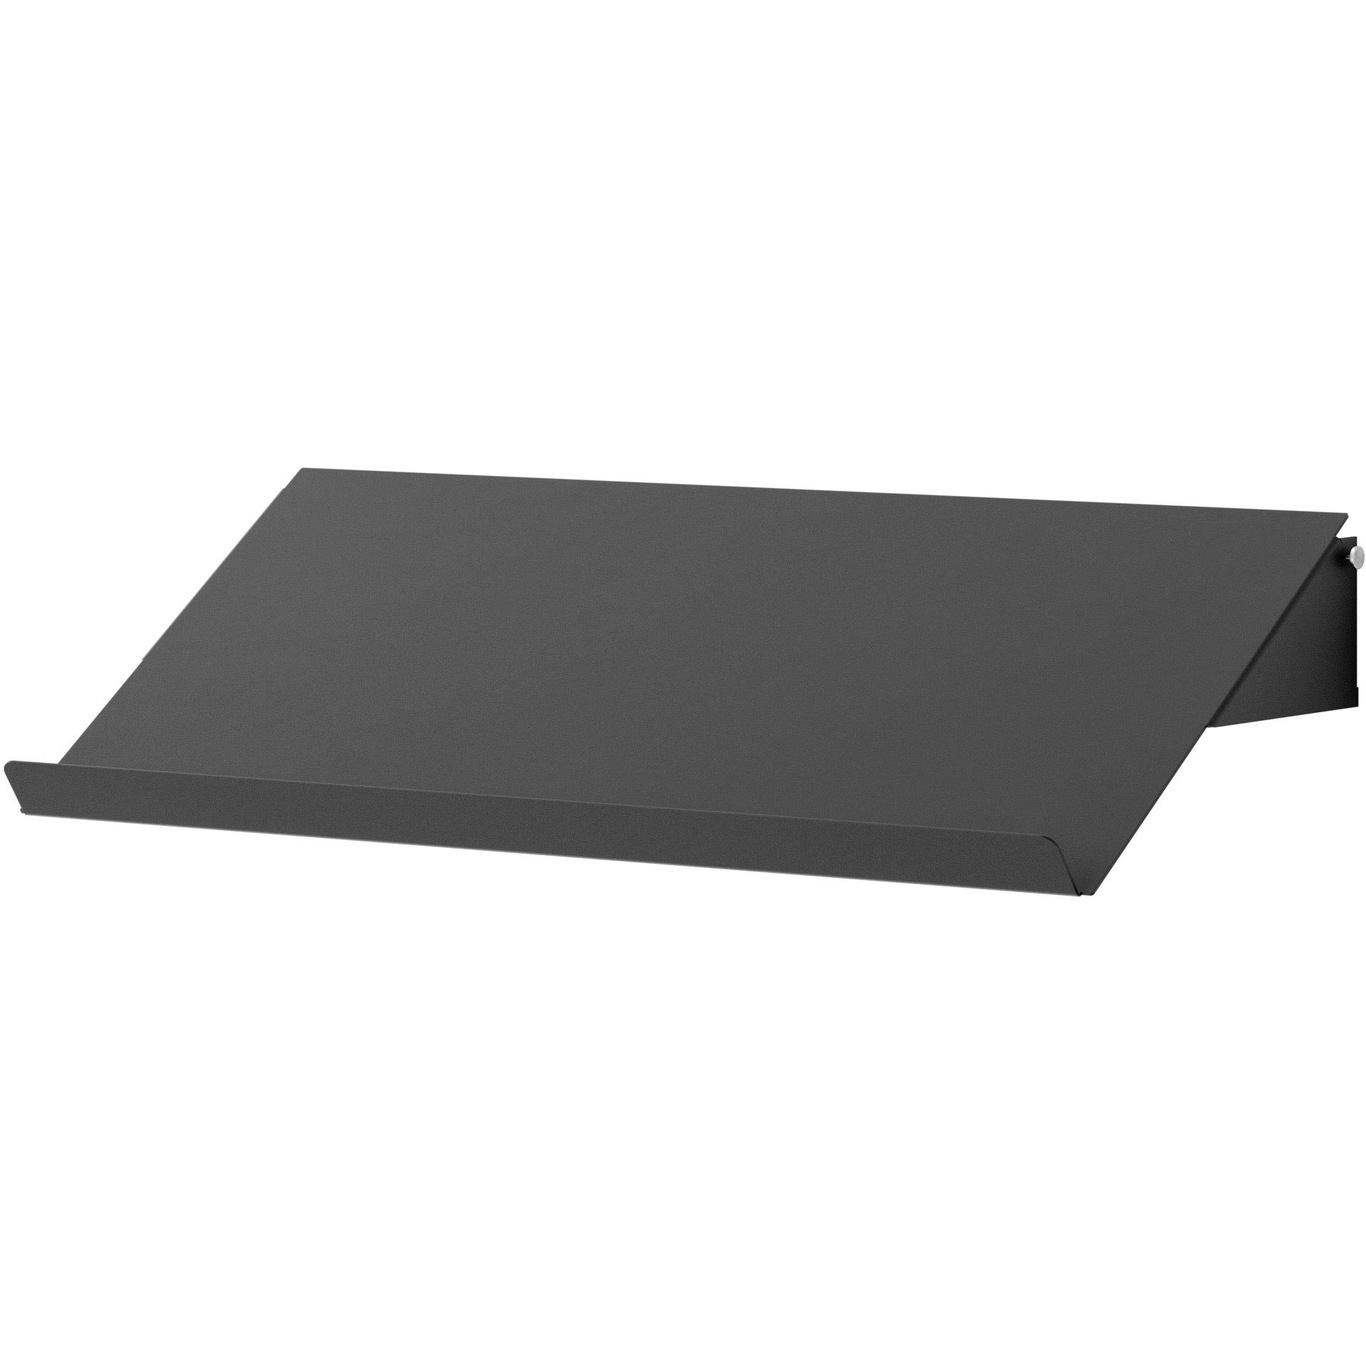 Shelf Slanted 35x80 cm, Black